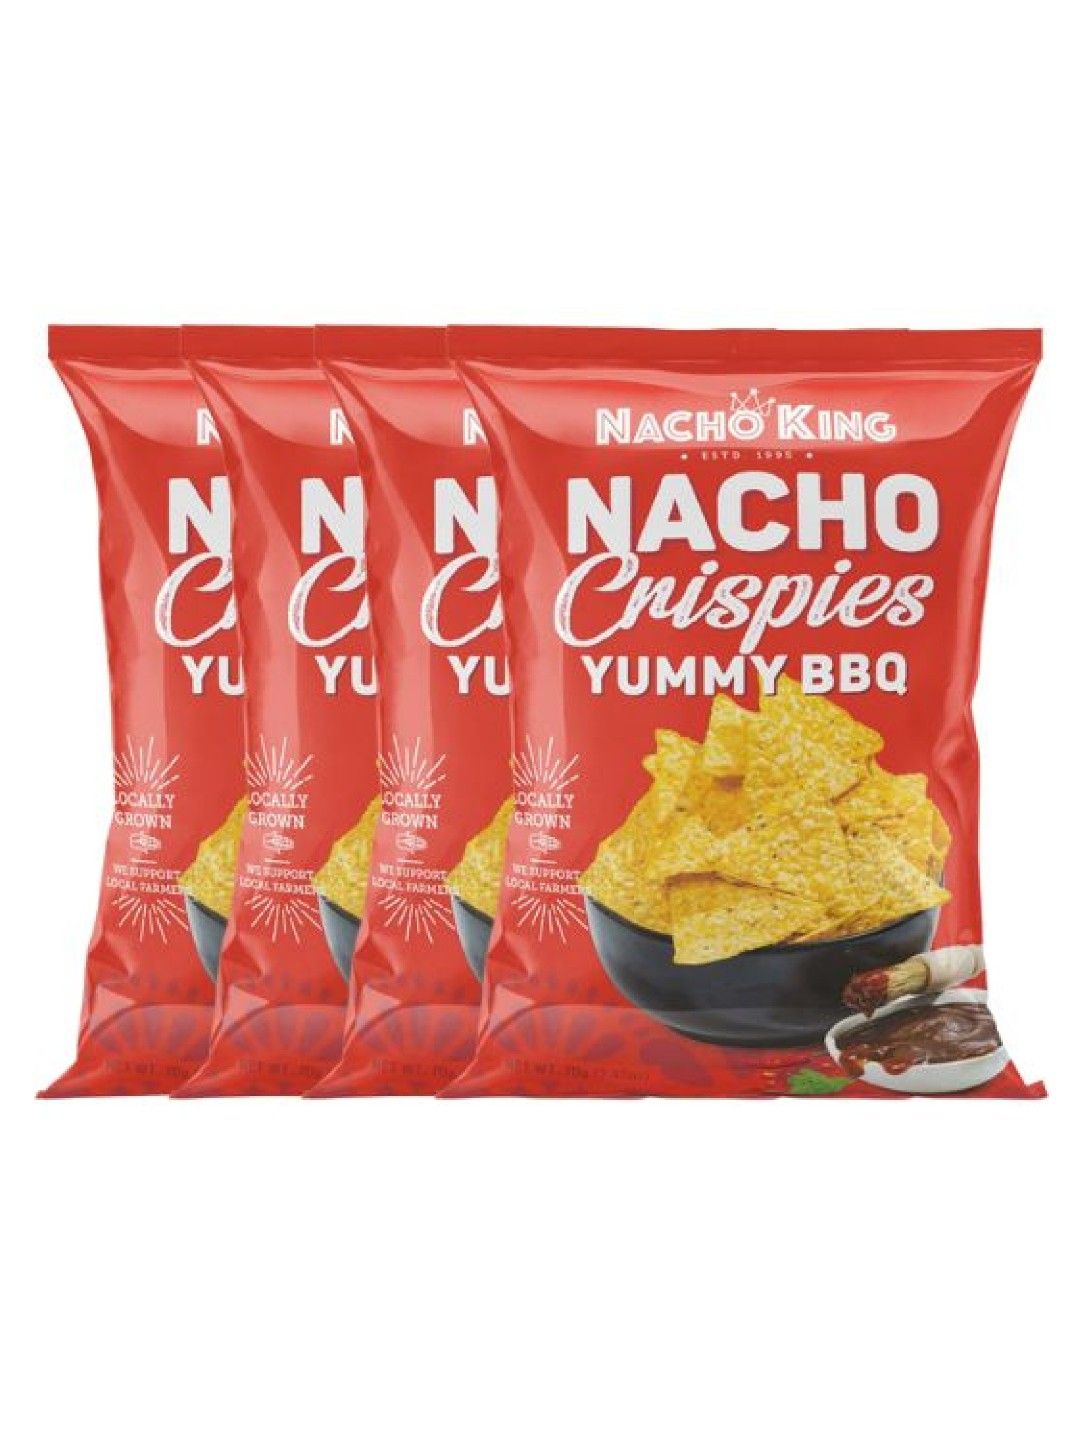 Nacho King Nacho Crispies Yummy BBQ - Bundle of 4